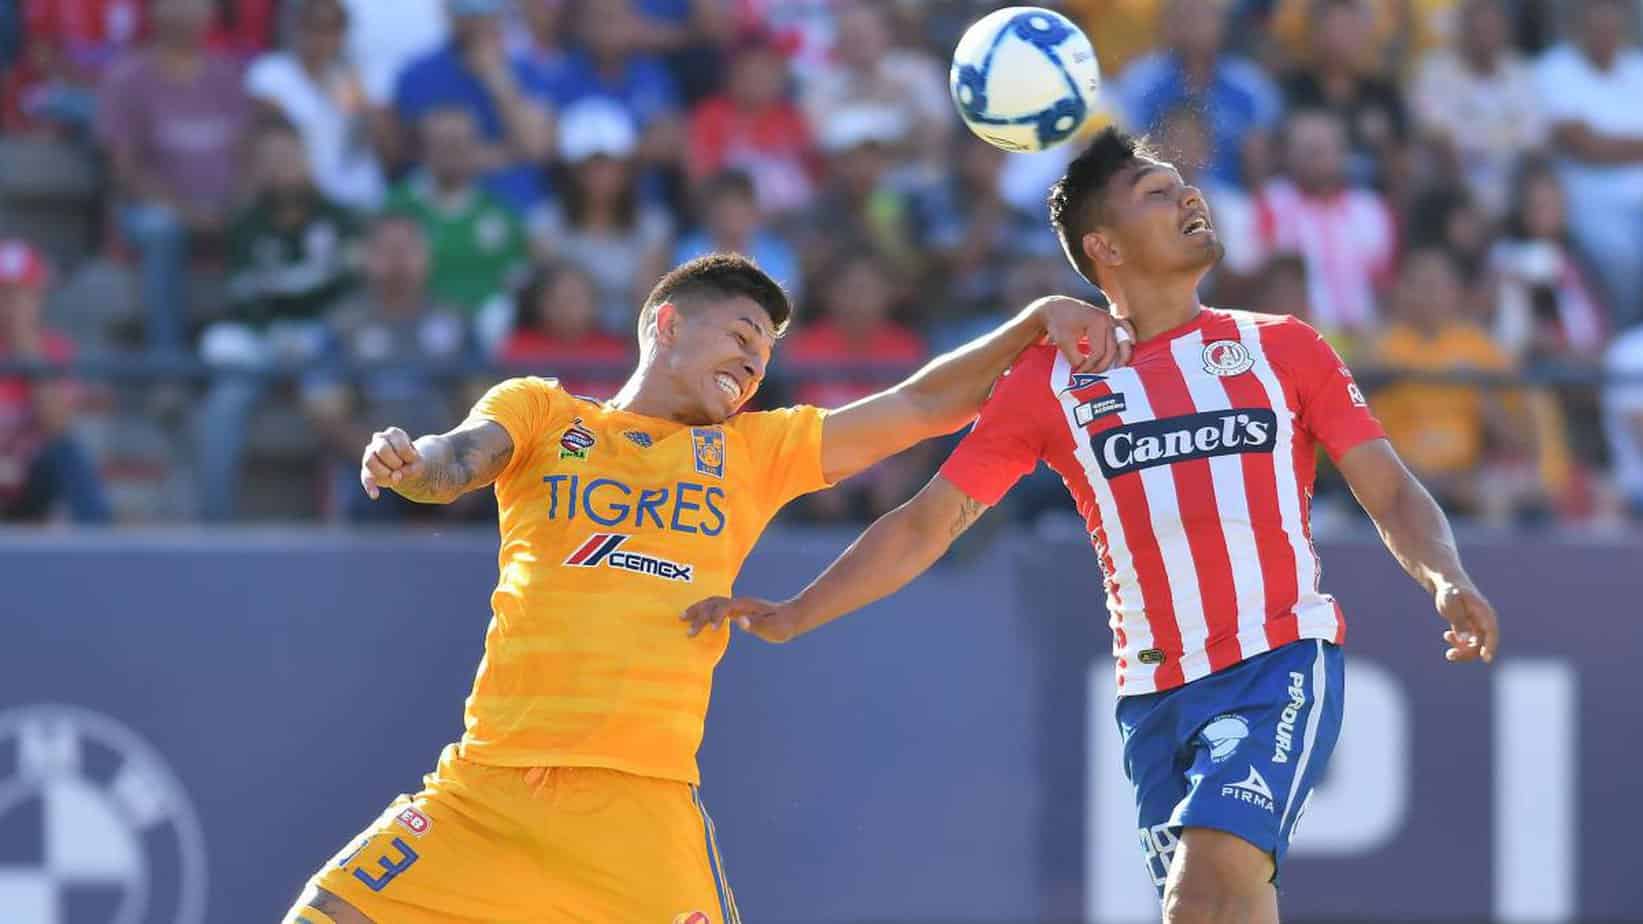 Tigres UANL vs. Atlético San Luis – Betting Odds and Free Pick